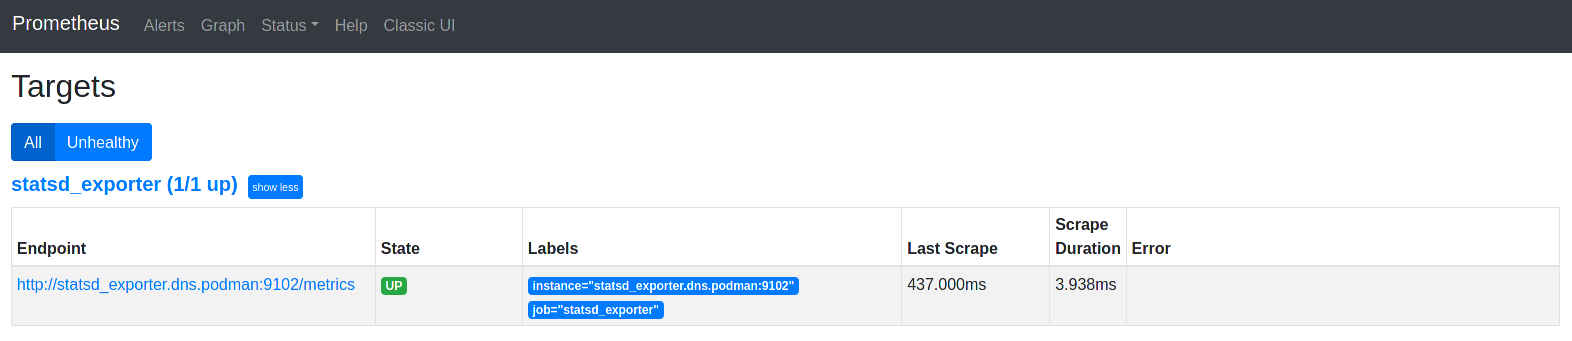 Prometheus successfully scrapes the statsd_exporter.